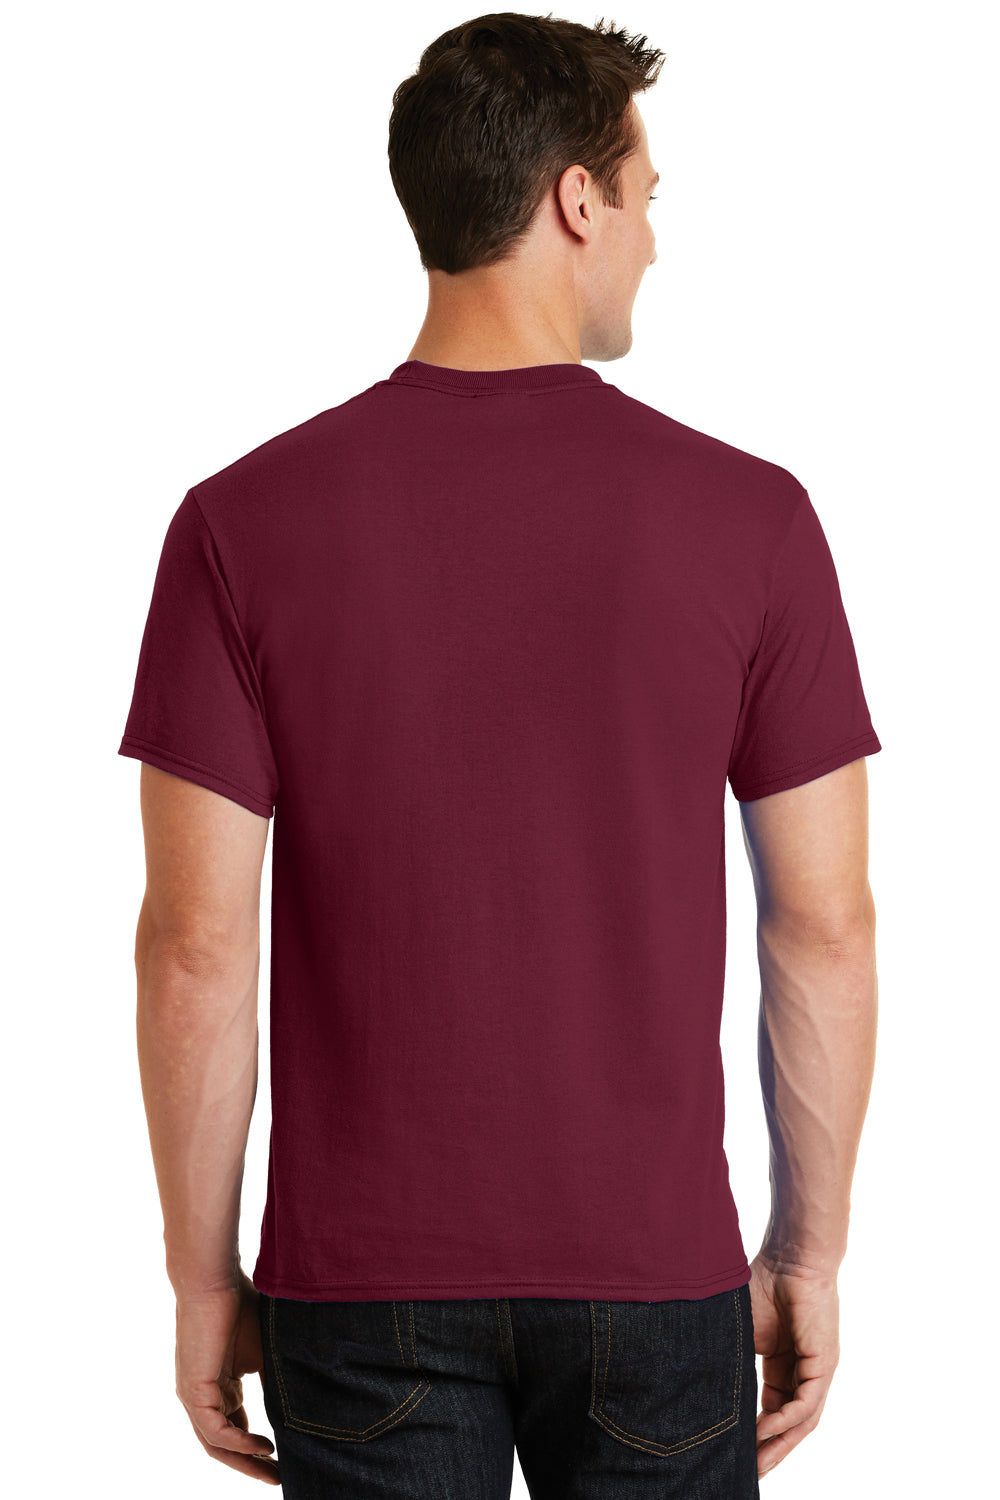 Port & Company PC55 Mens Core Short Sleeve Crewneck T-Shirt Cardinal Red Back